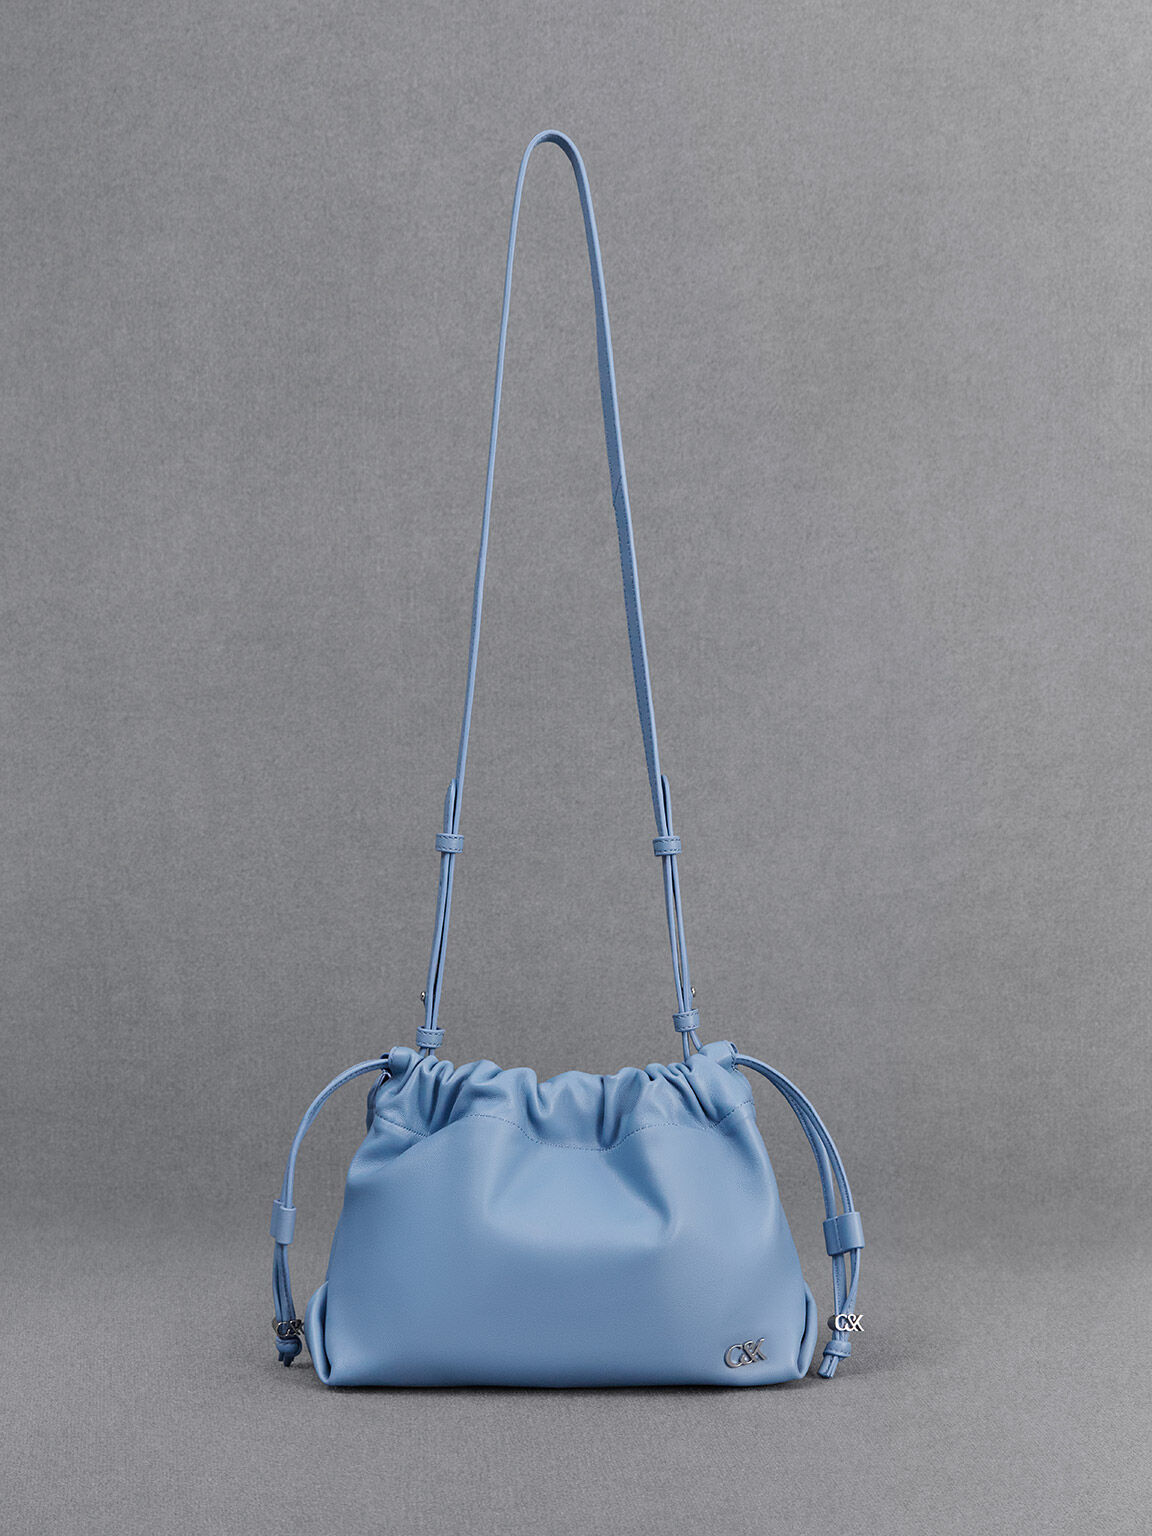 Women's Handbags | Exclusive Styles | CHARLES & KEITH US